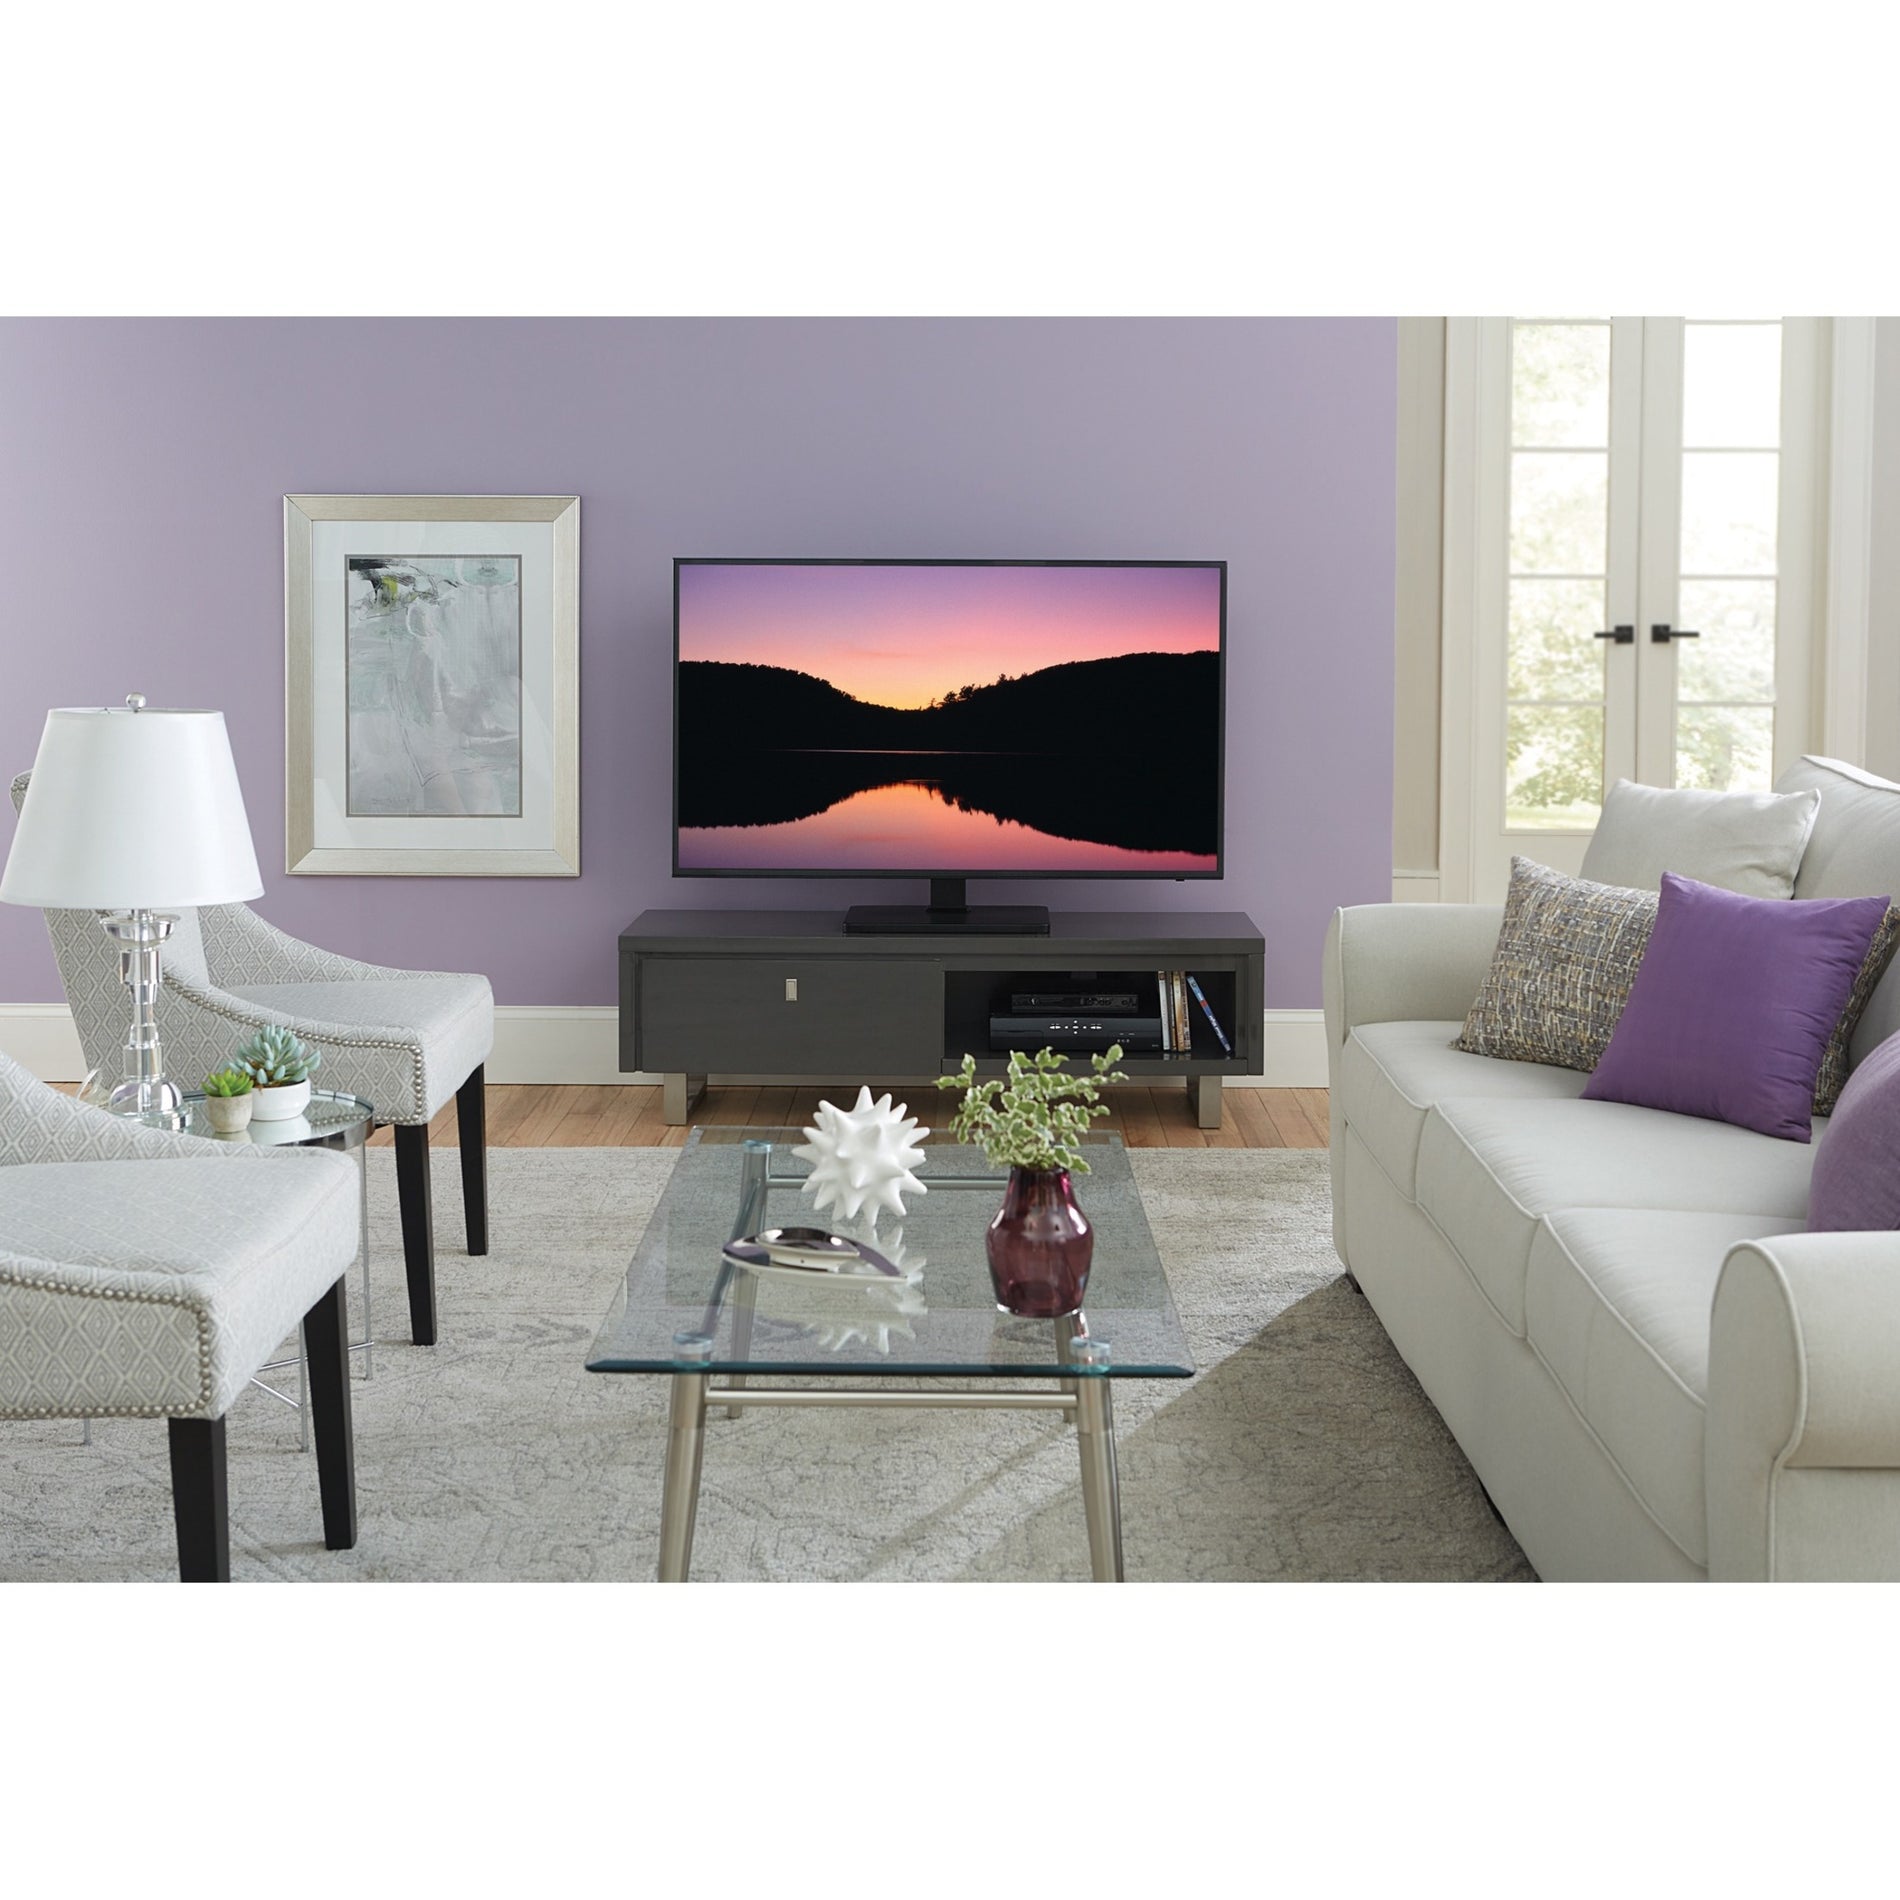 SANUS VSTV1-B1 Swivel TV Stand fits 32"-60" TVs, Multiple Viewing Angle, 5 Year Warranty